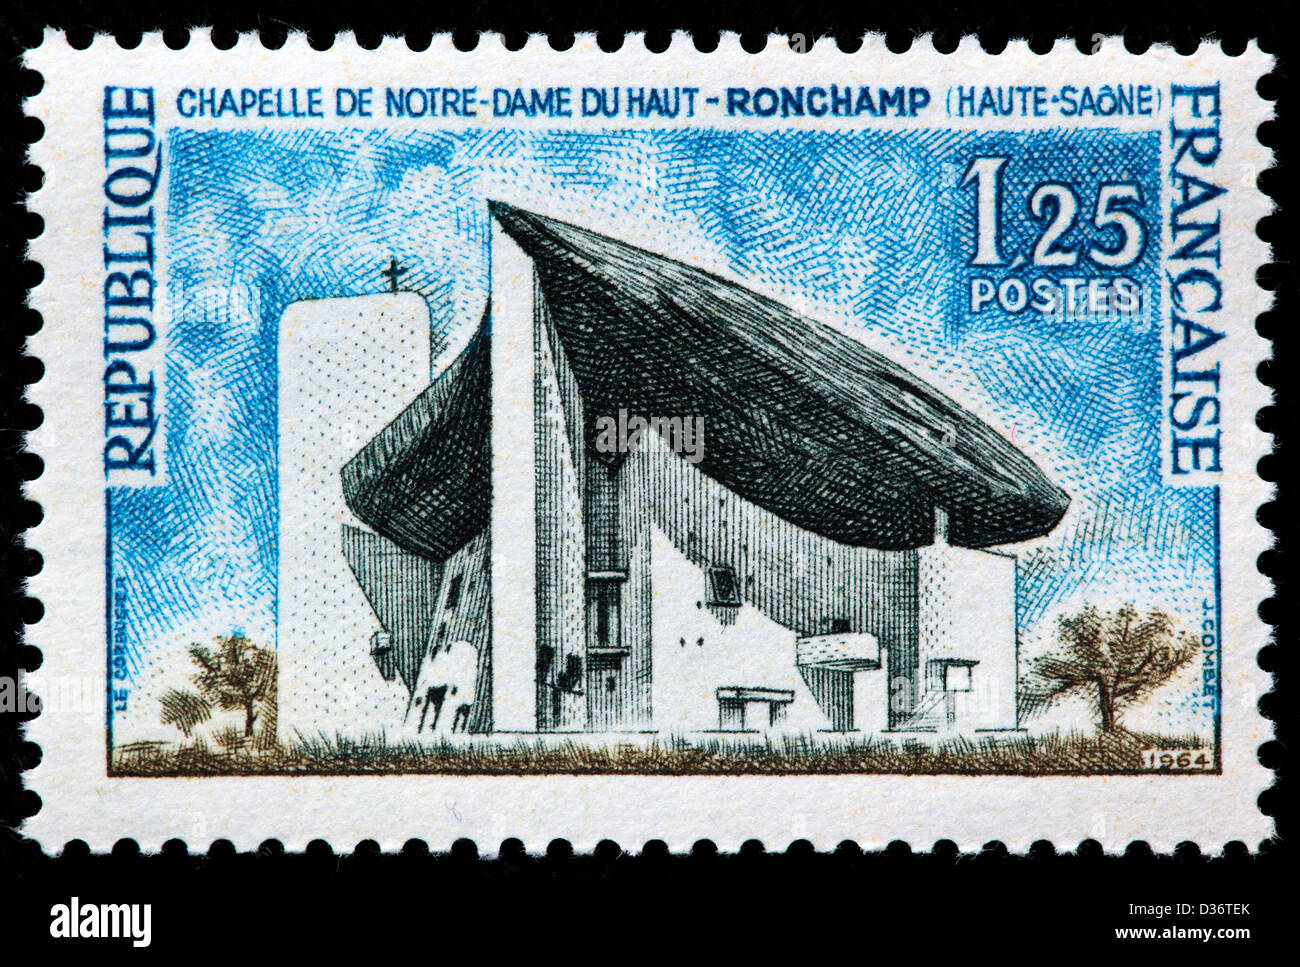 Chapel of Notre Dame du Haut, Ronchamp, postage stamp, France, 1964 Stock Photo